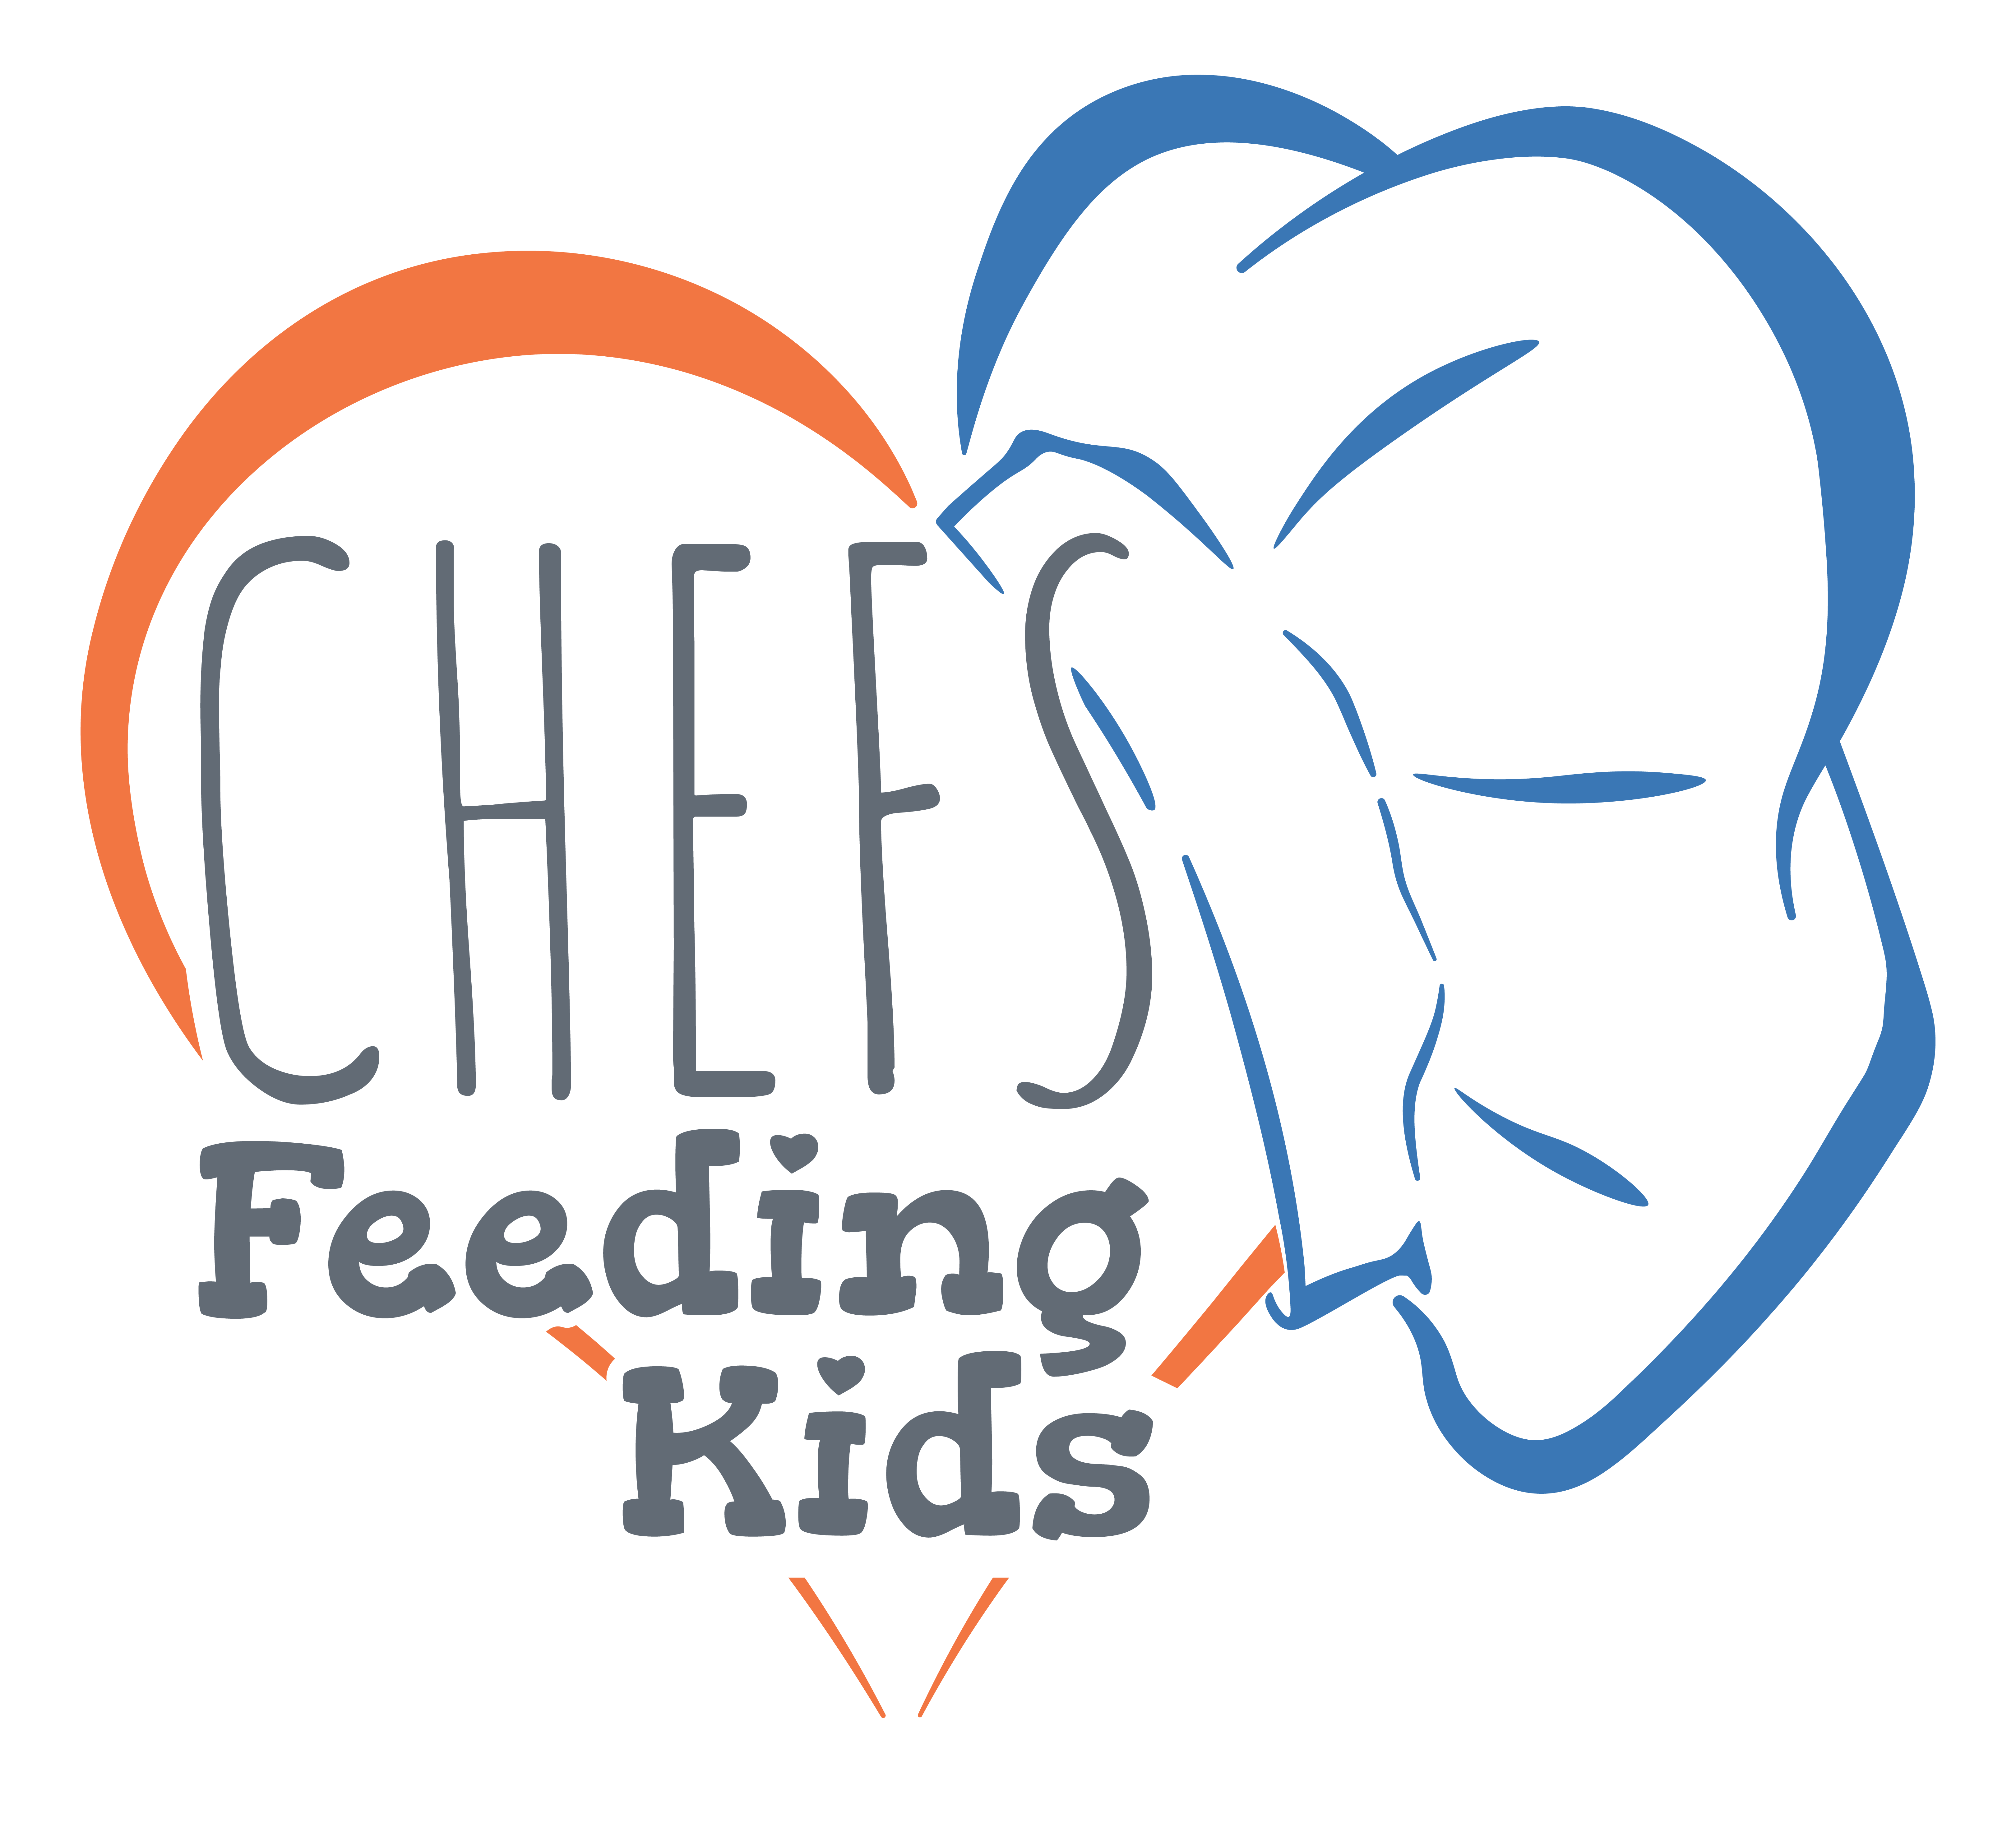 Chefs Feeding Kids